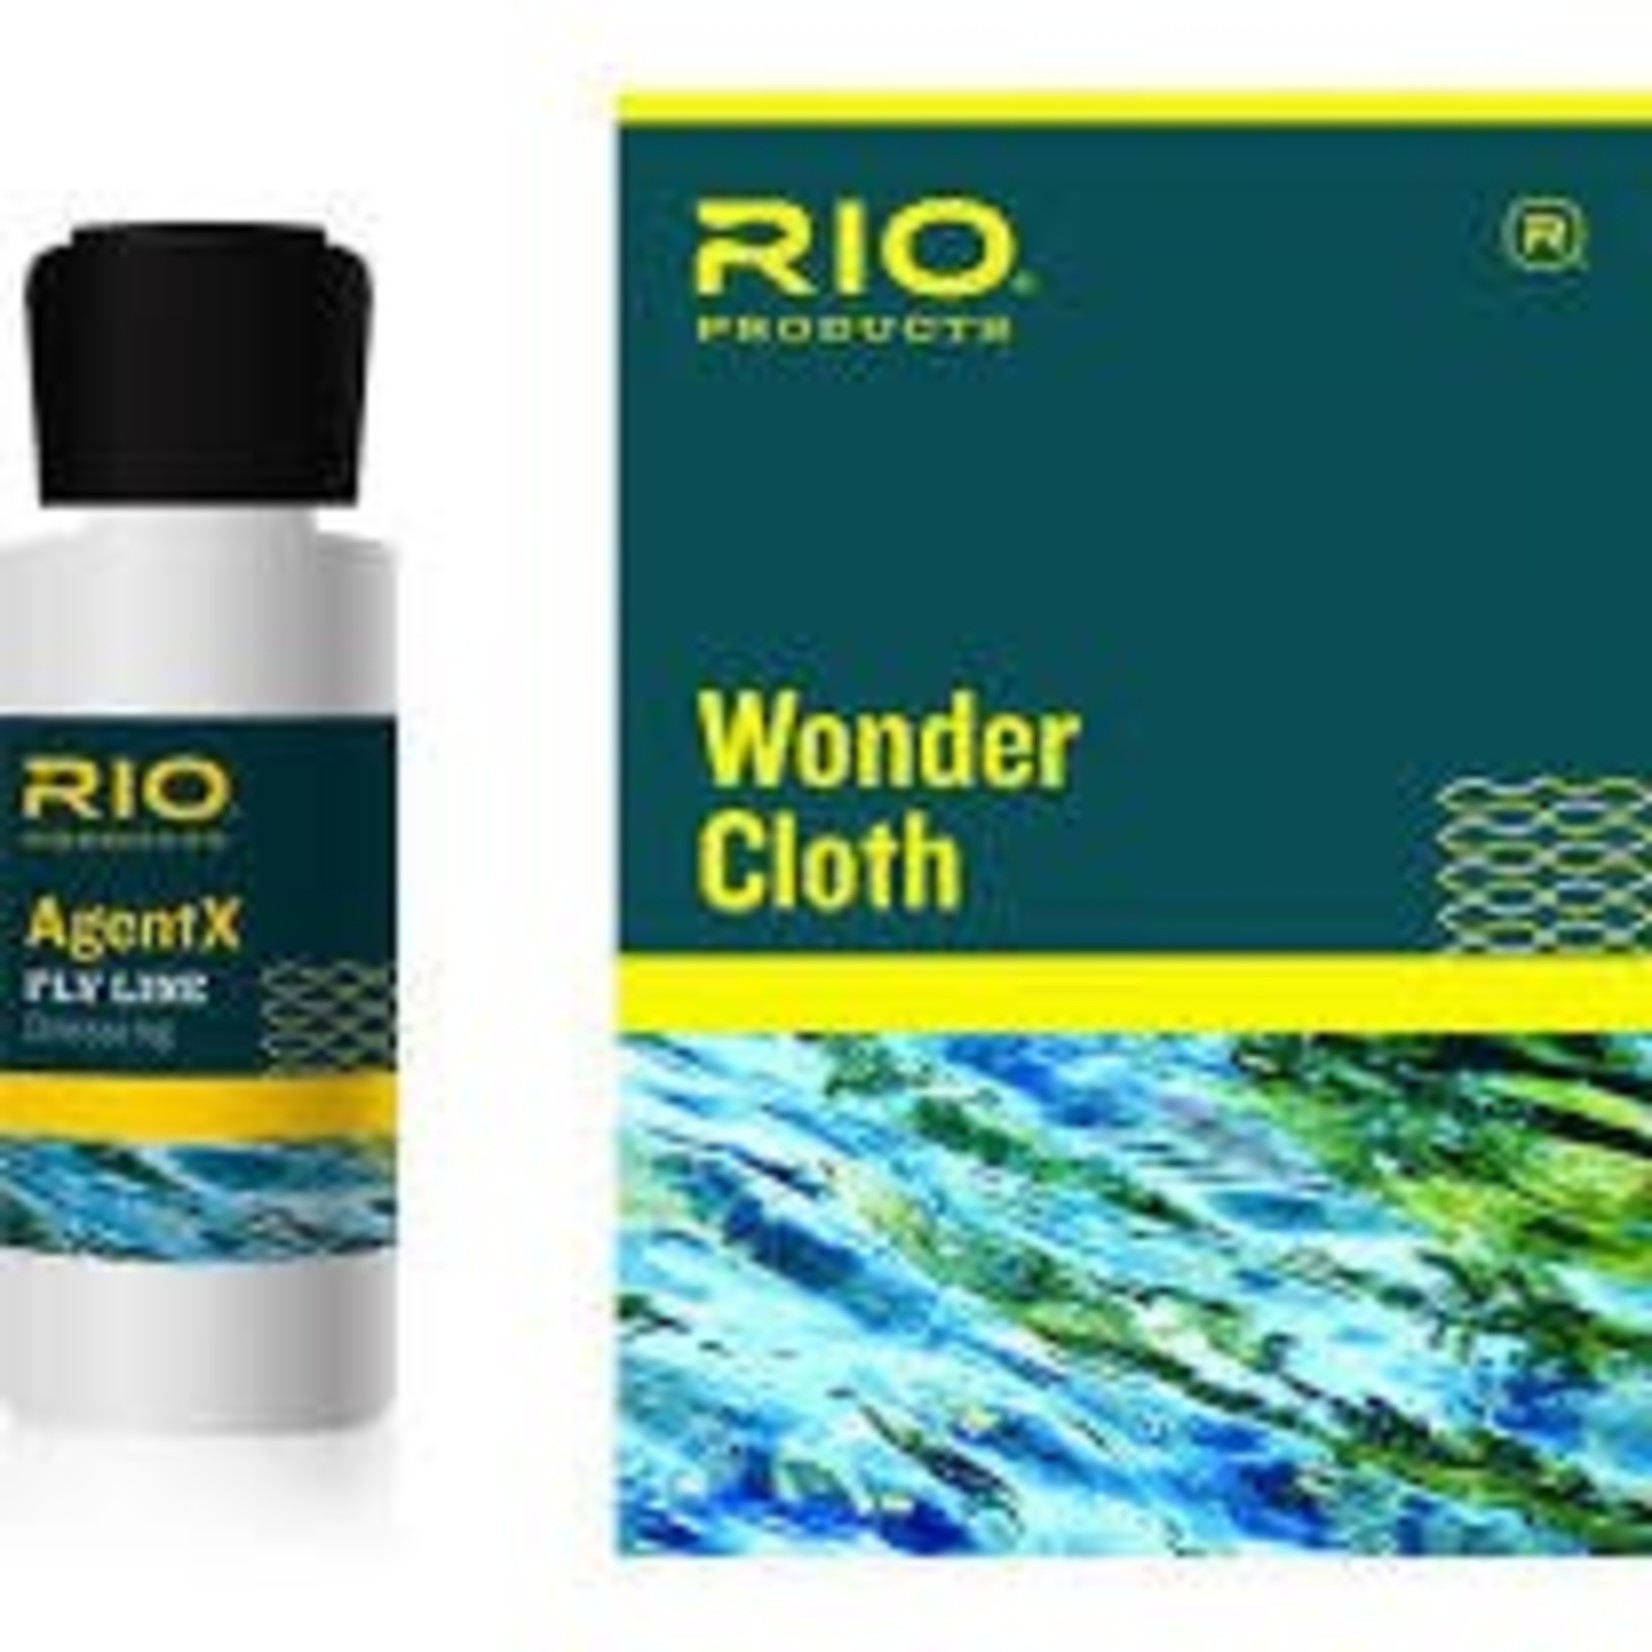 RIO Agent X Line Kit